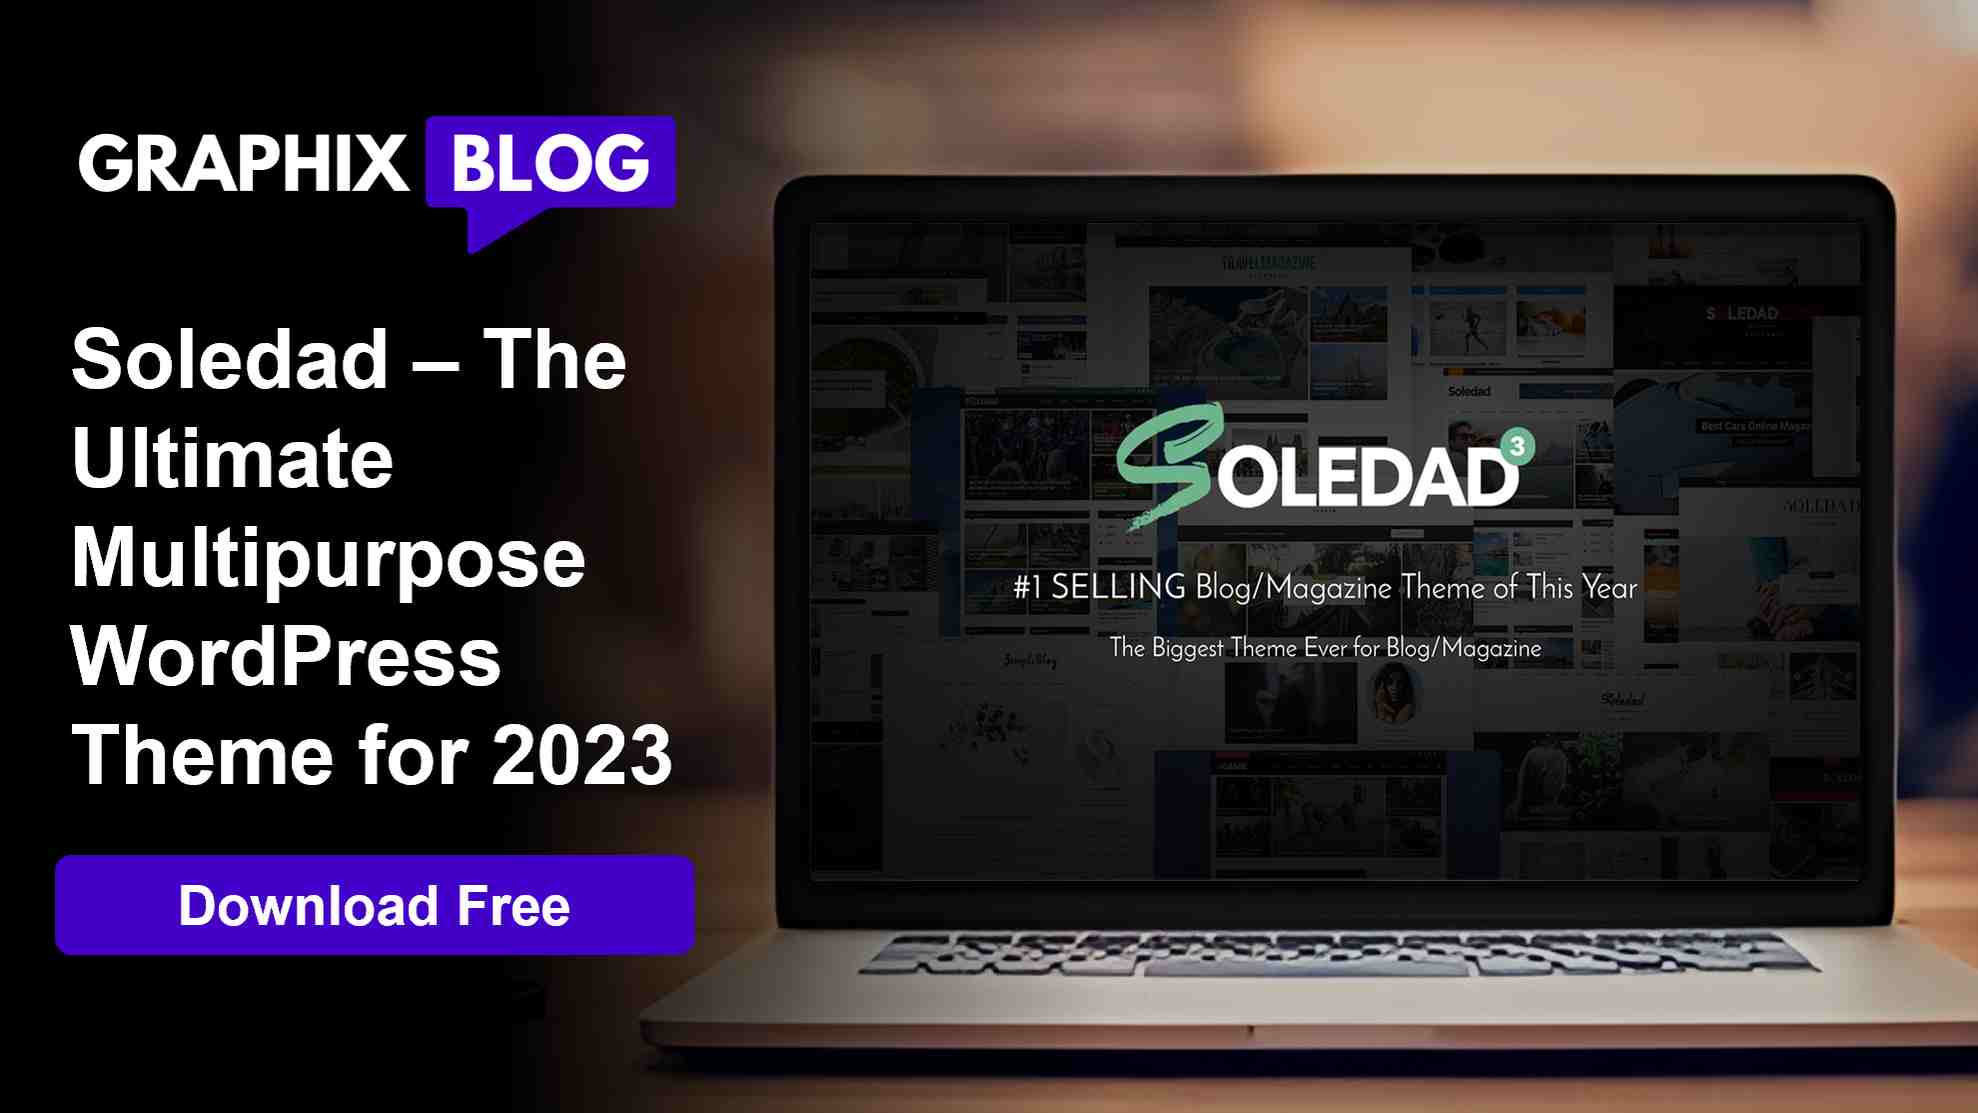 Soledad – The Ultimate Multipurpose WordPress Theme for 2023